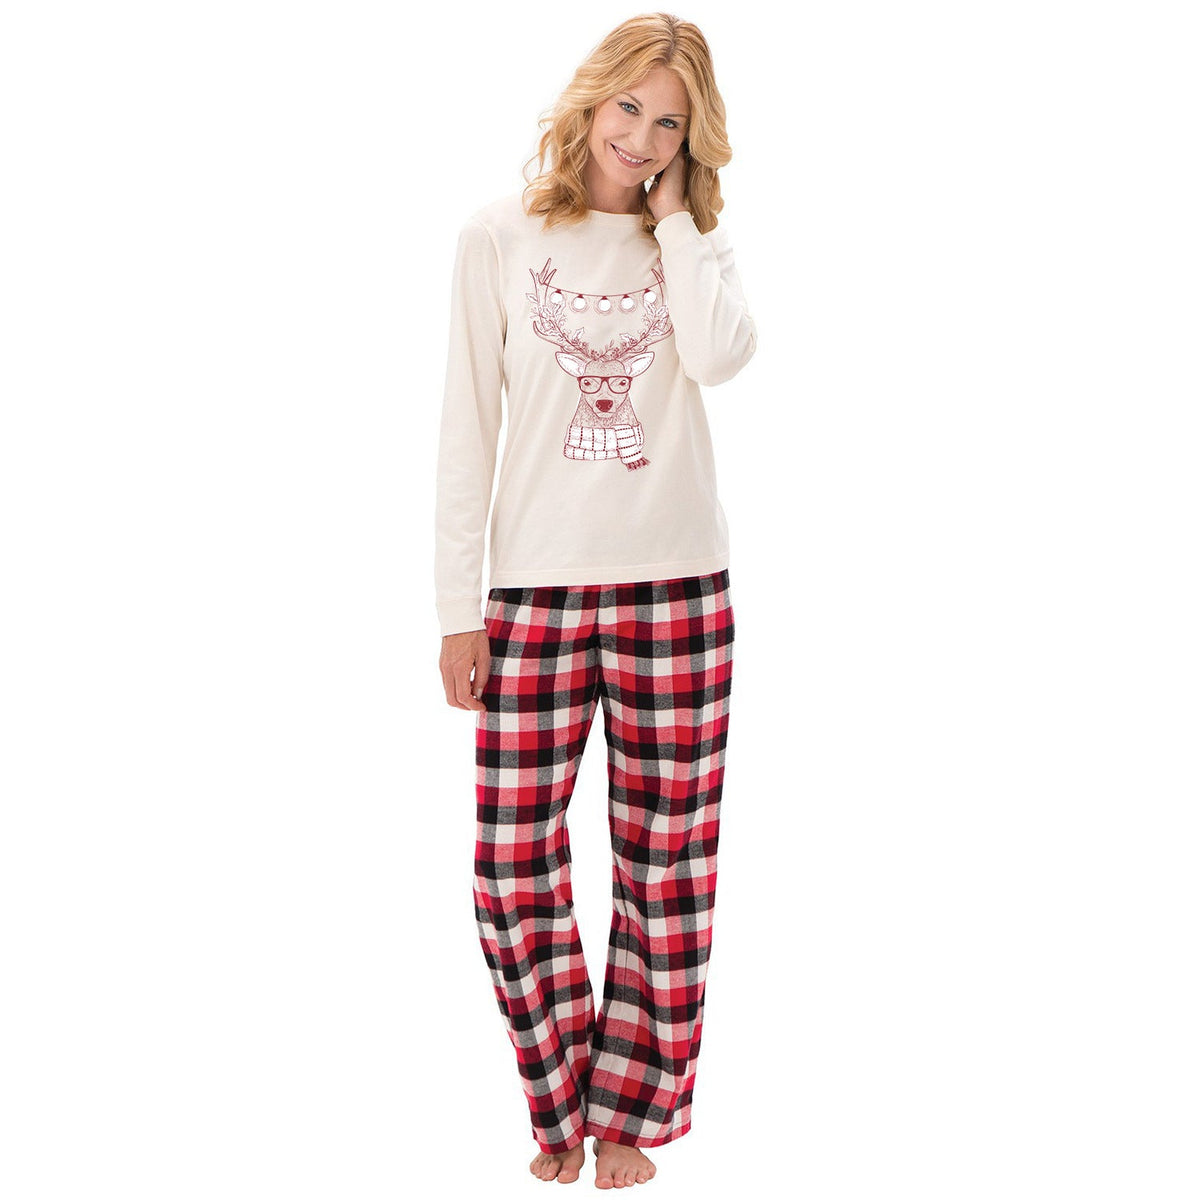 Christmas Family Matching Pajamas Sleepwear Sets Christmas White Deer Top and Red Plaids Pants 8